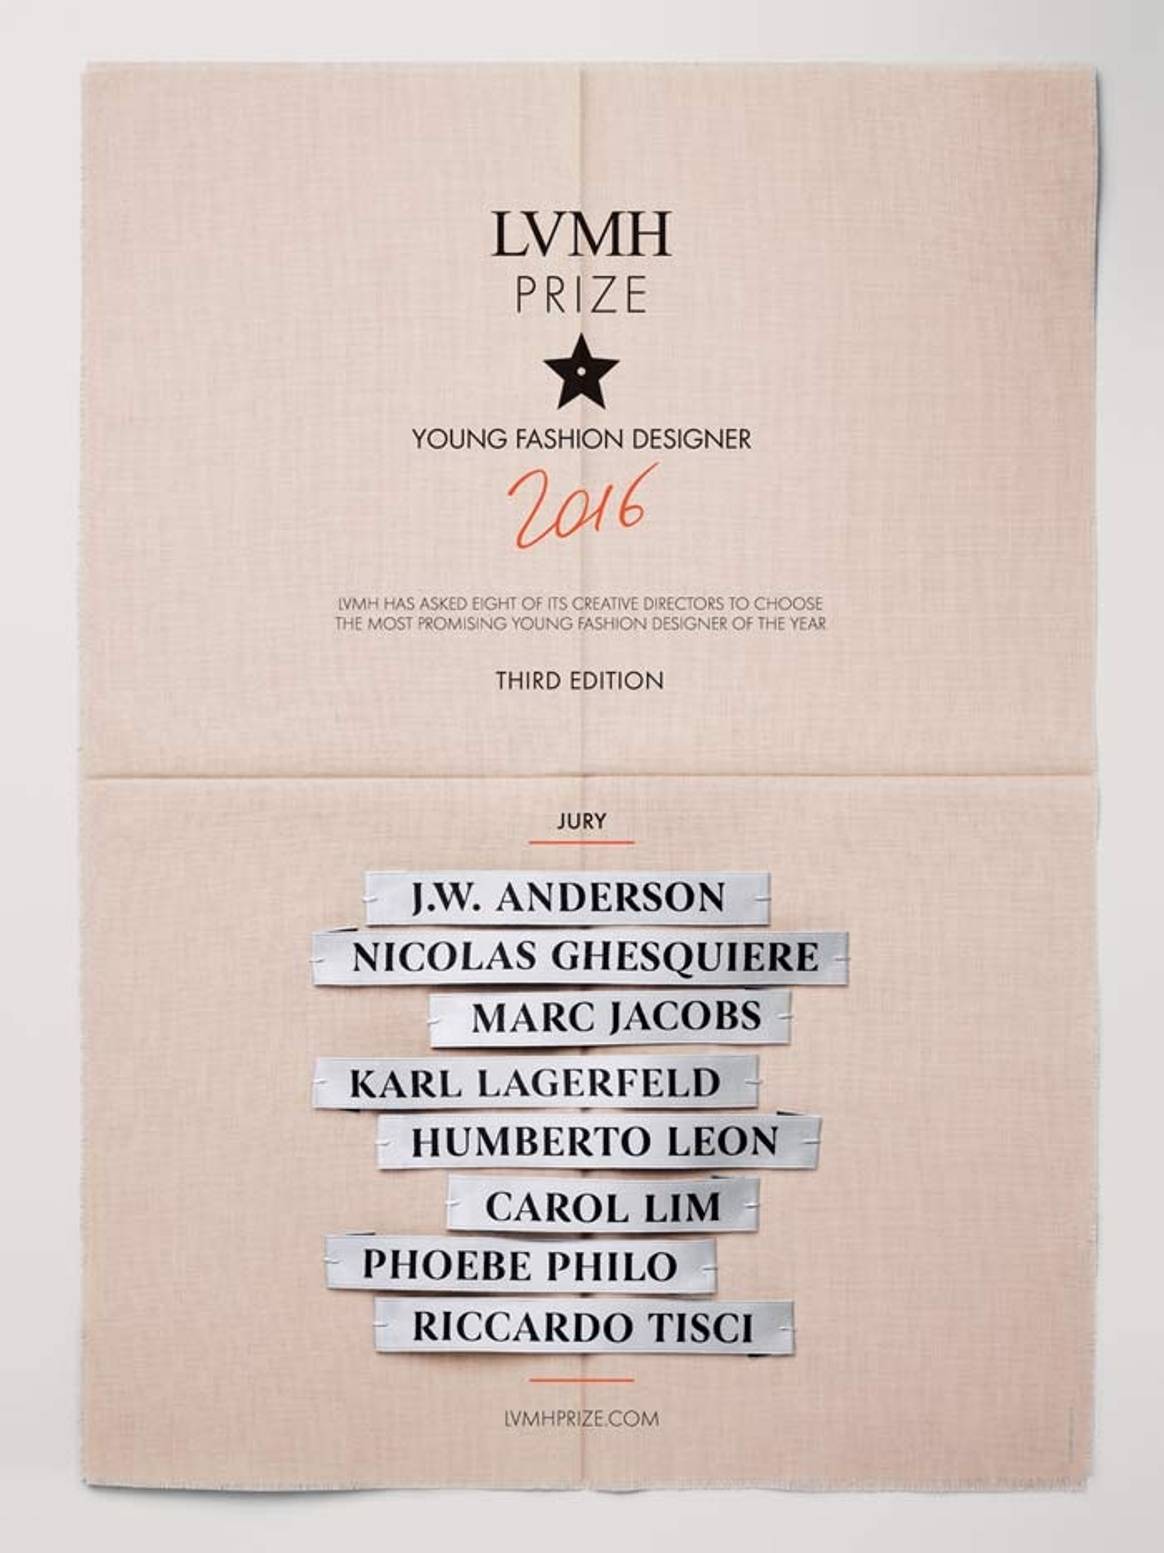 LVMH reveals trio of Parisian designers amongst 8 finalists for 2016 award